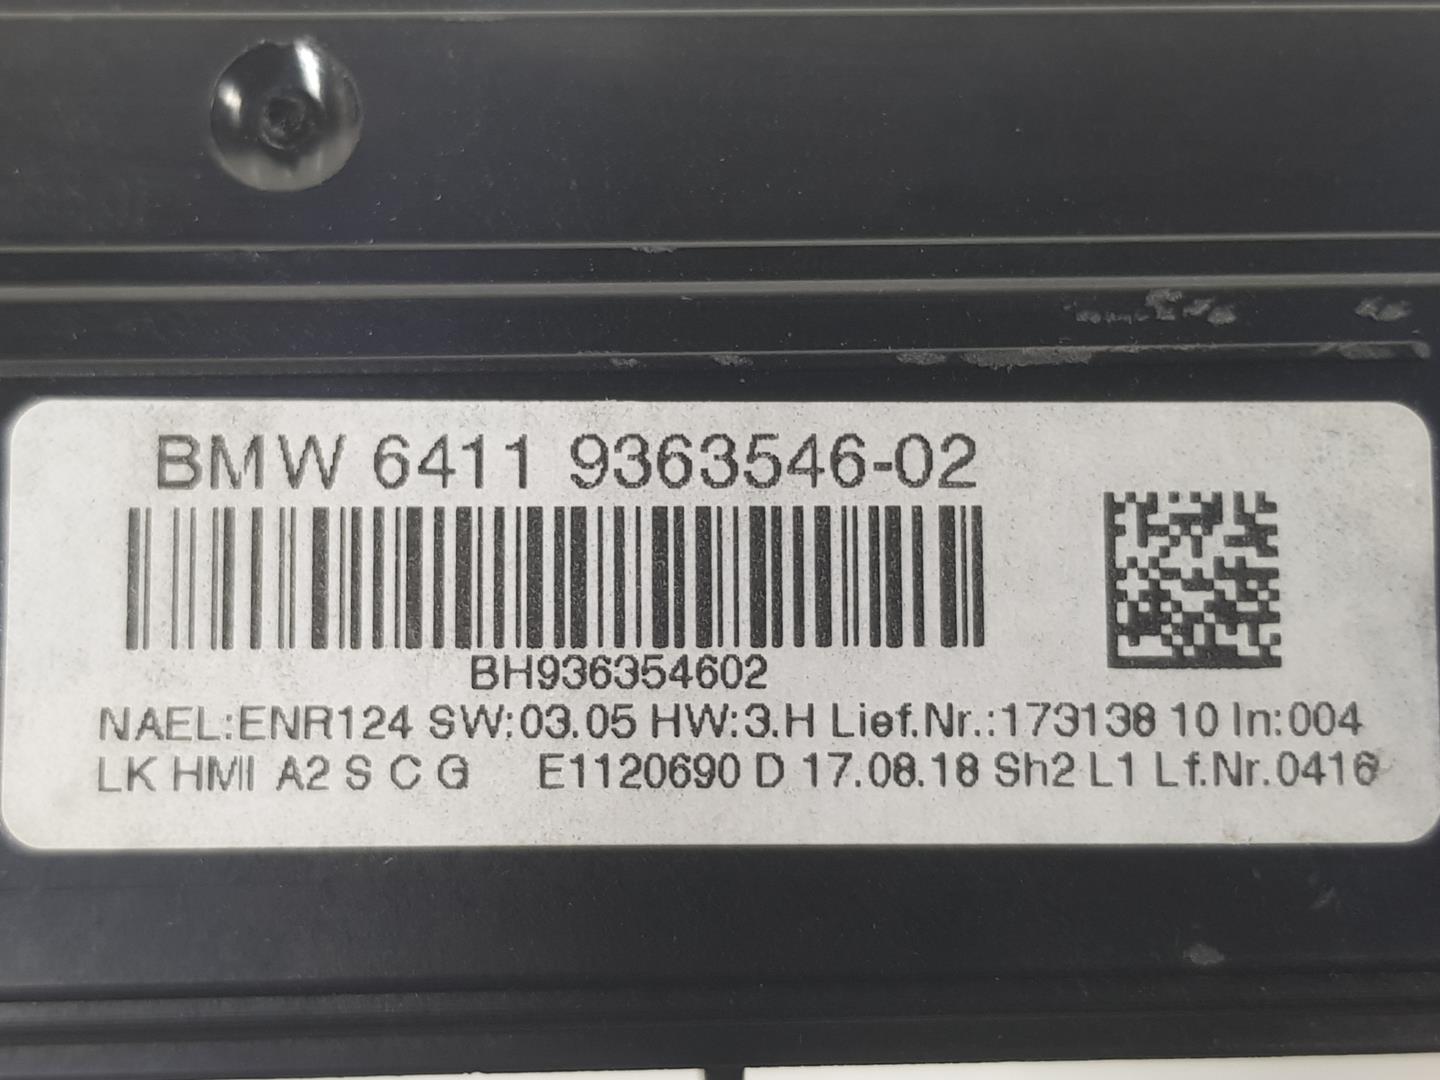 BMW 2 Series F22/F23 (2013-2020) Pегулятор климы 9363546, 64119363546, 1141CB 24245568